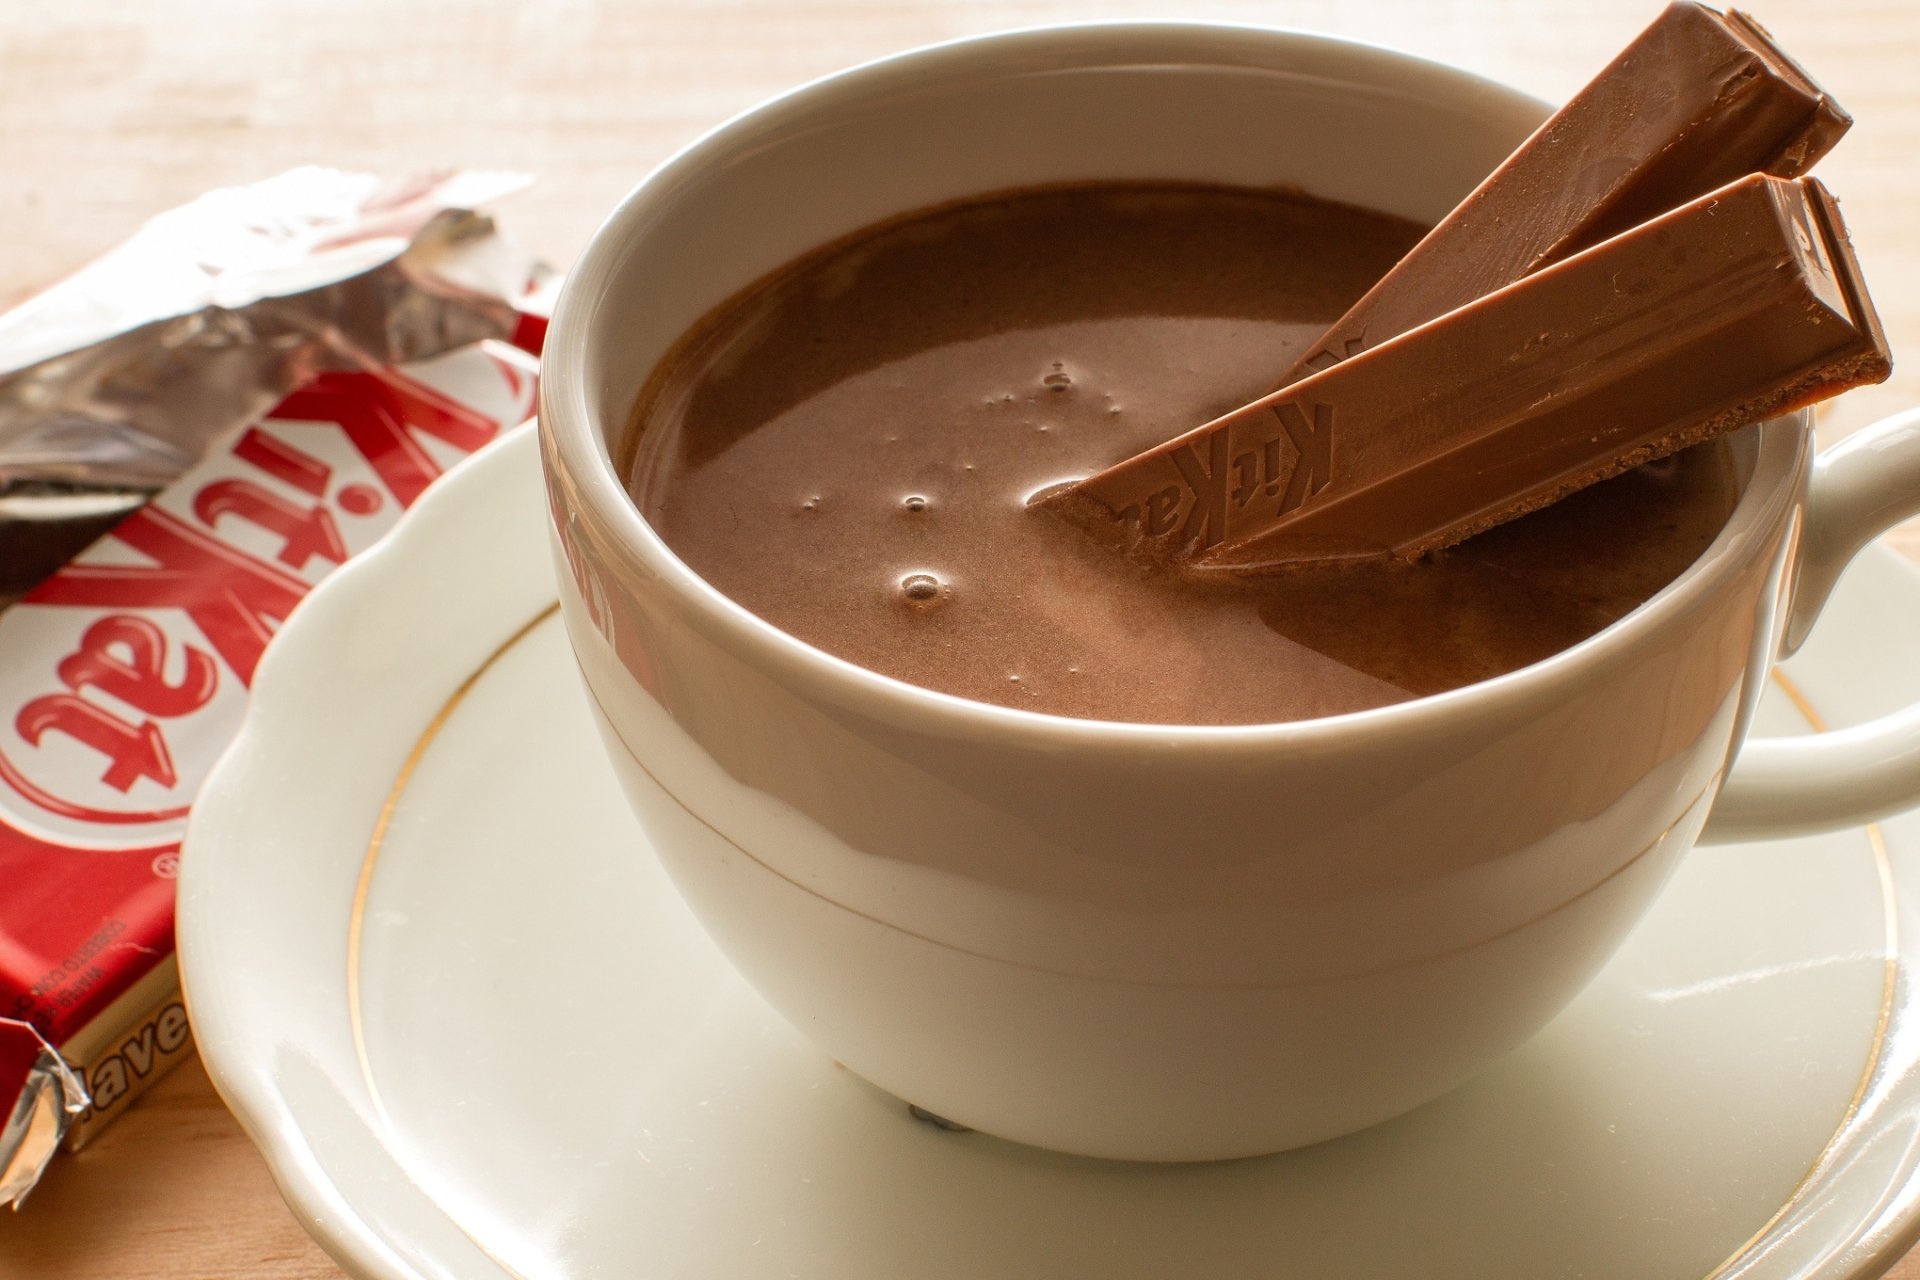 Hot chocolate milfs